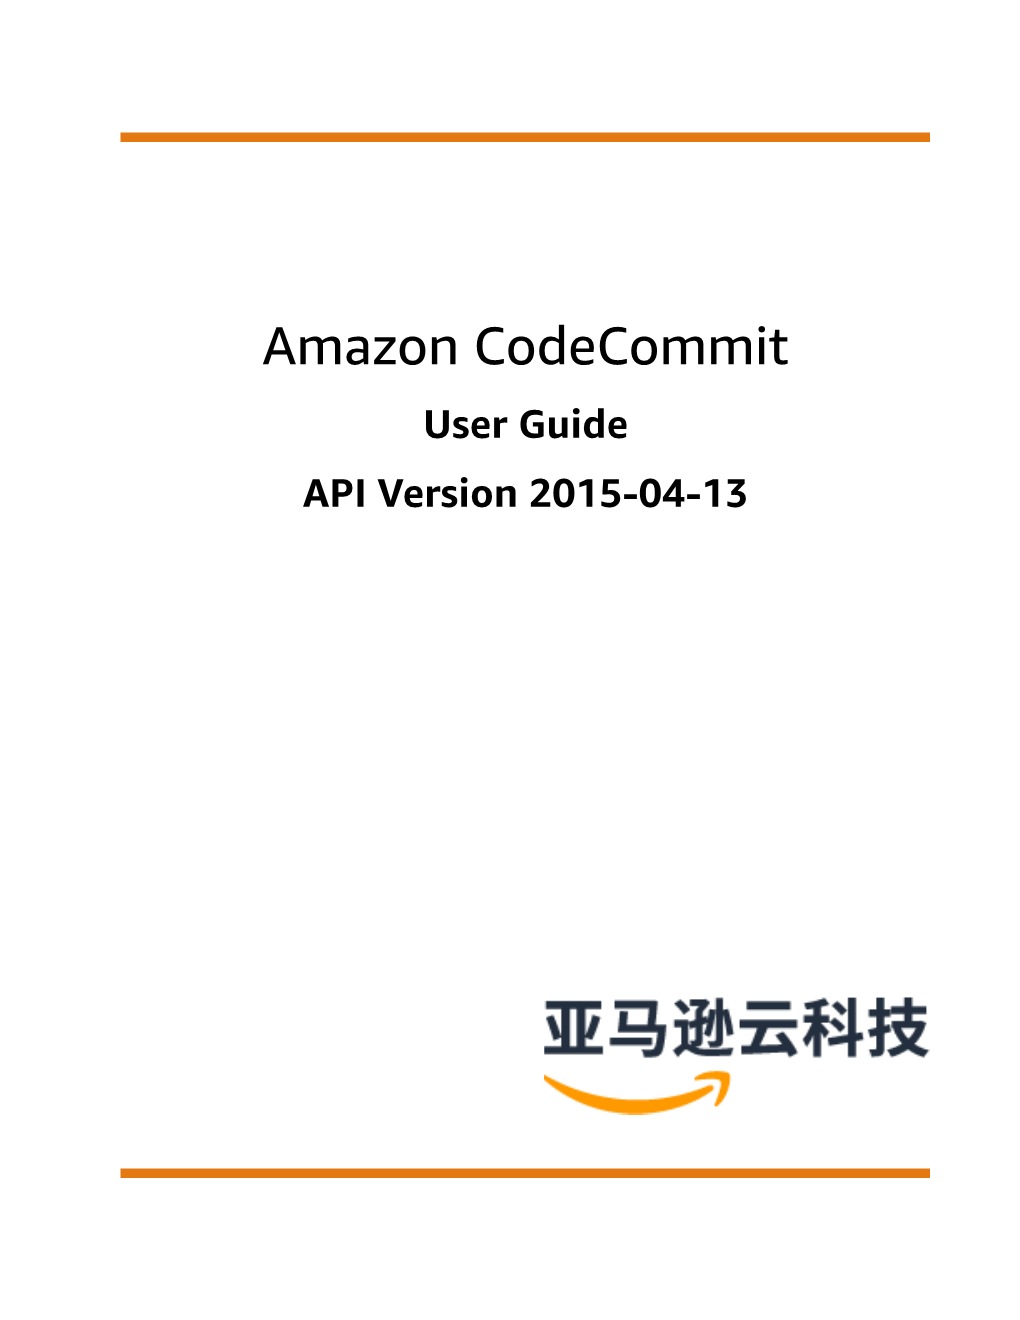 Amazon Codecommit User Guide API Version 2015-04-13 Amazon Codecommit User Guide